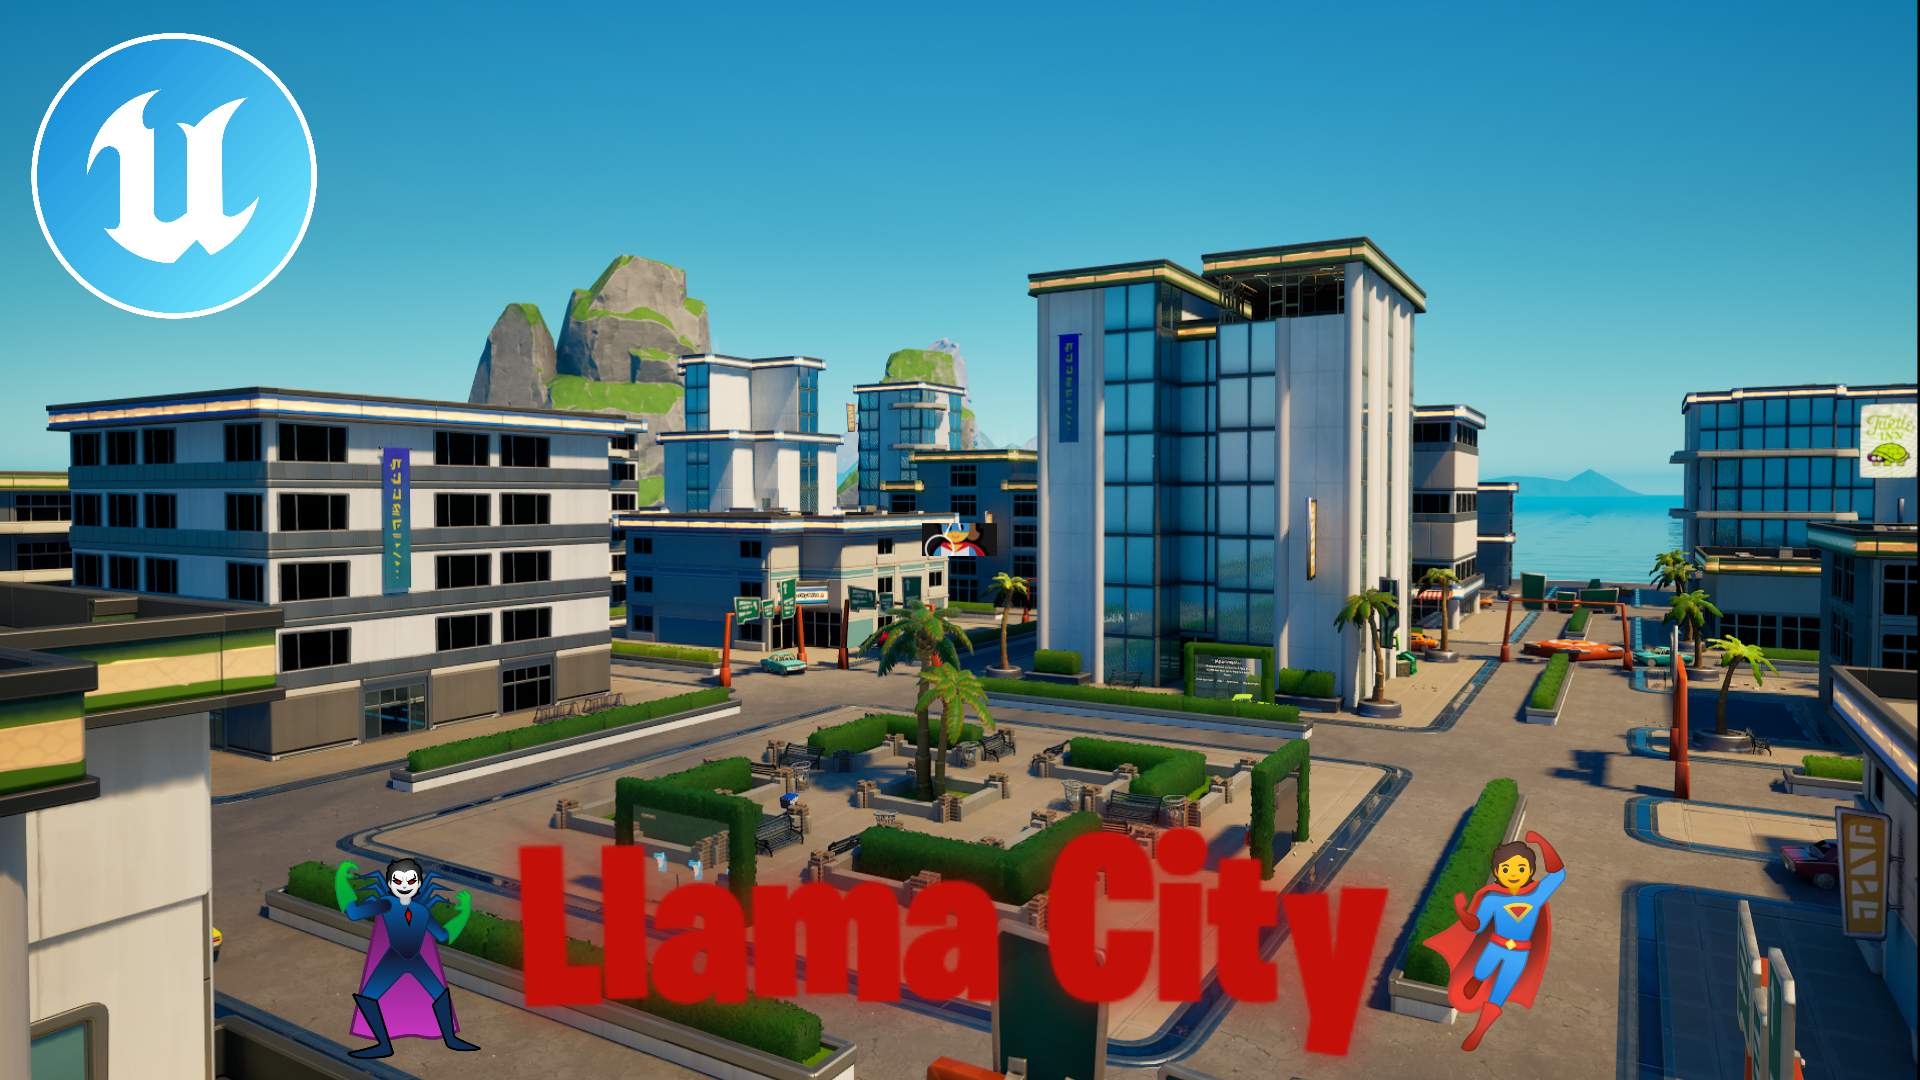 Llama City (2.0) image 2